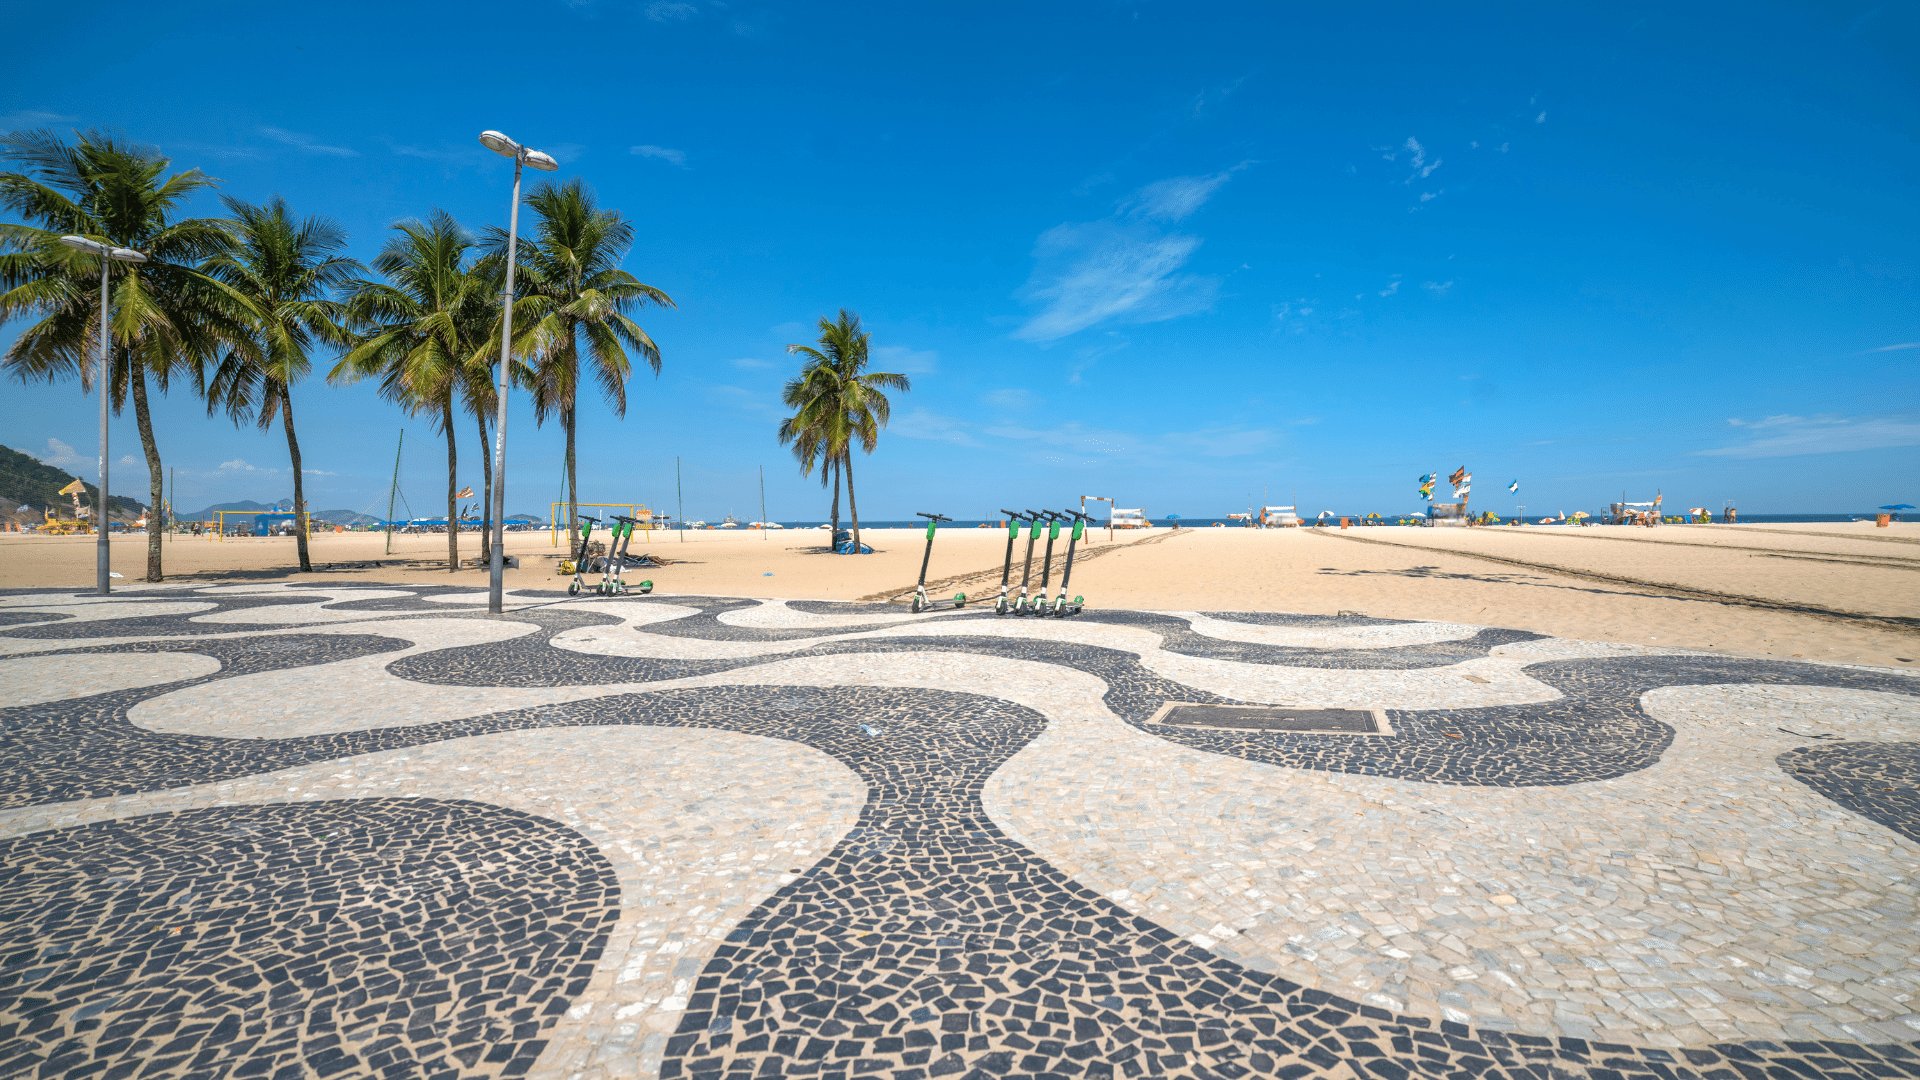 Vista da calçada e da praia de Copacabana